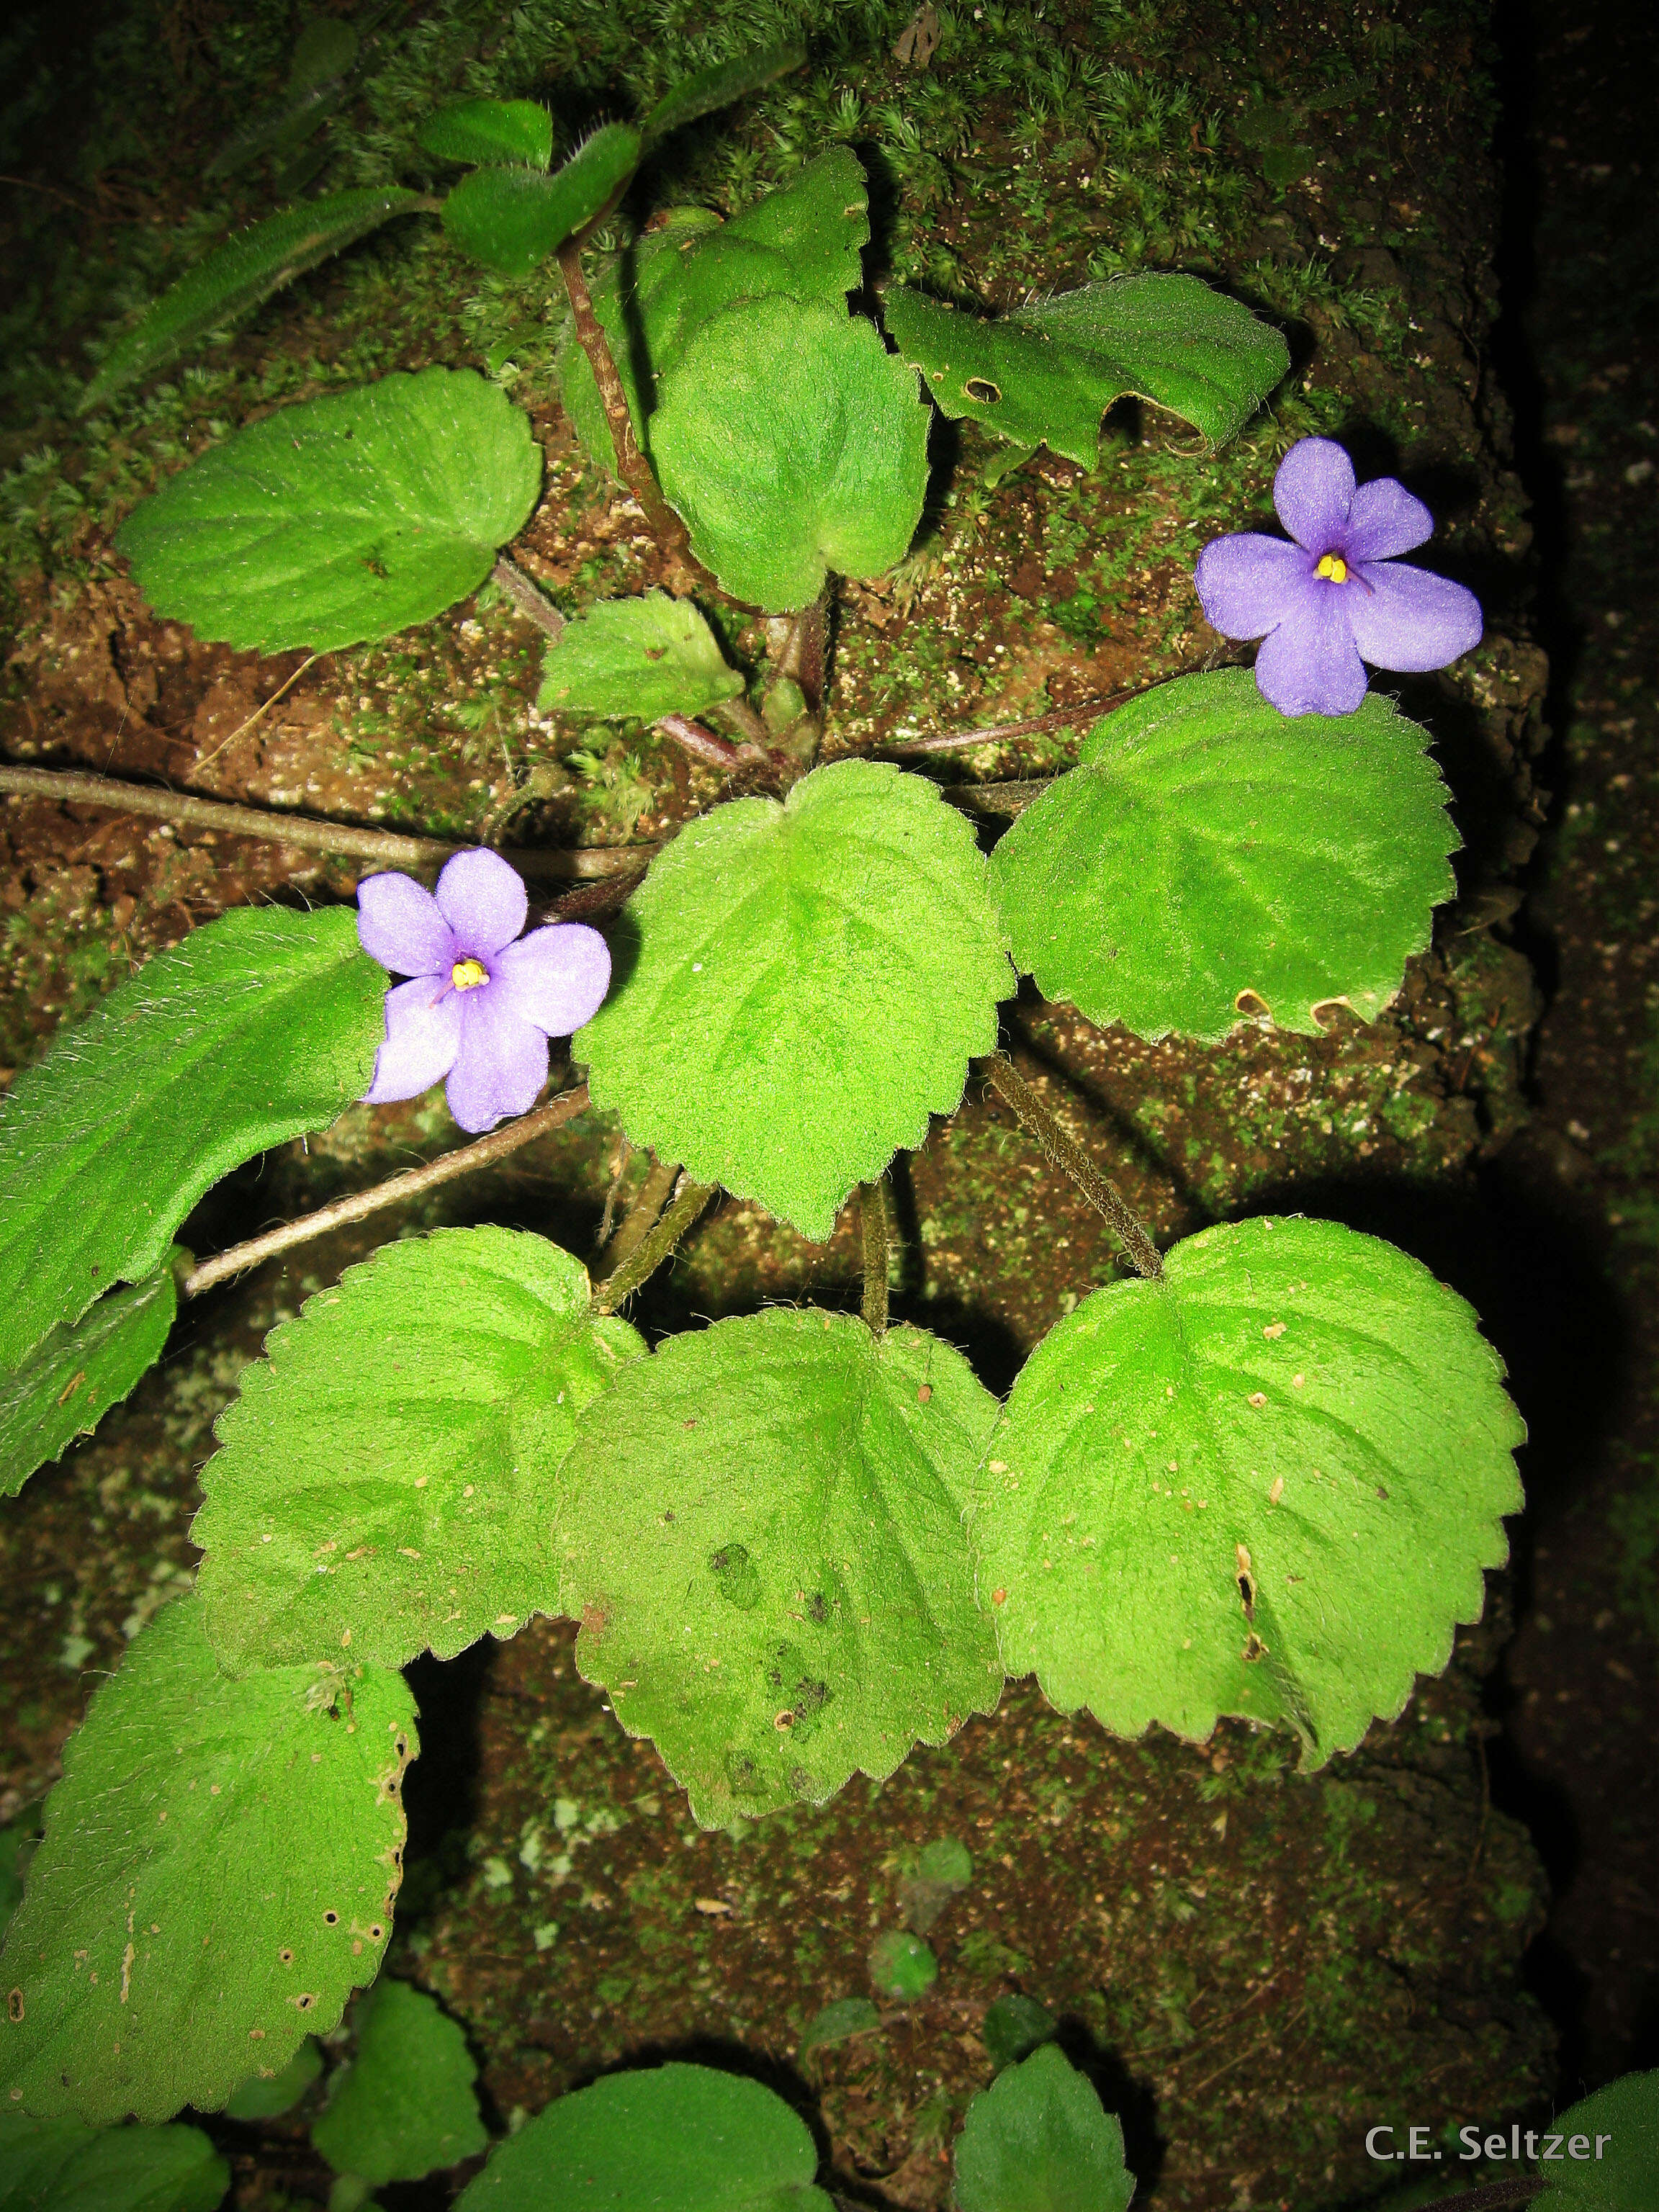 Image of African violet